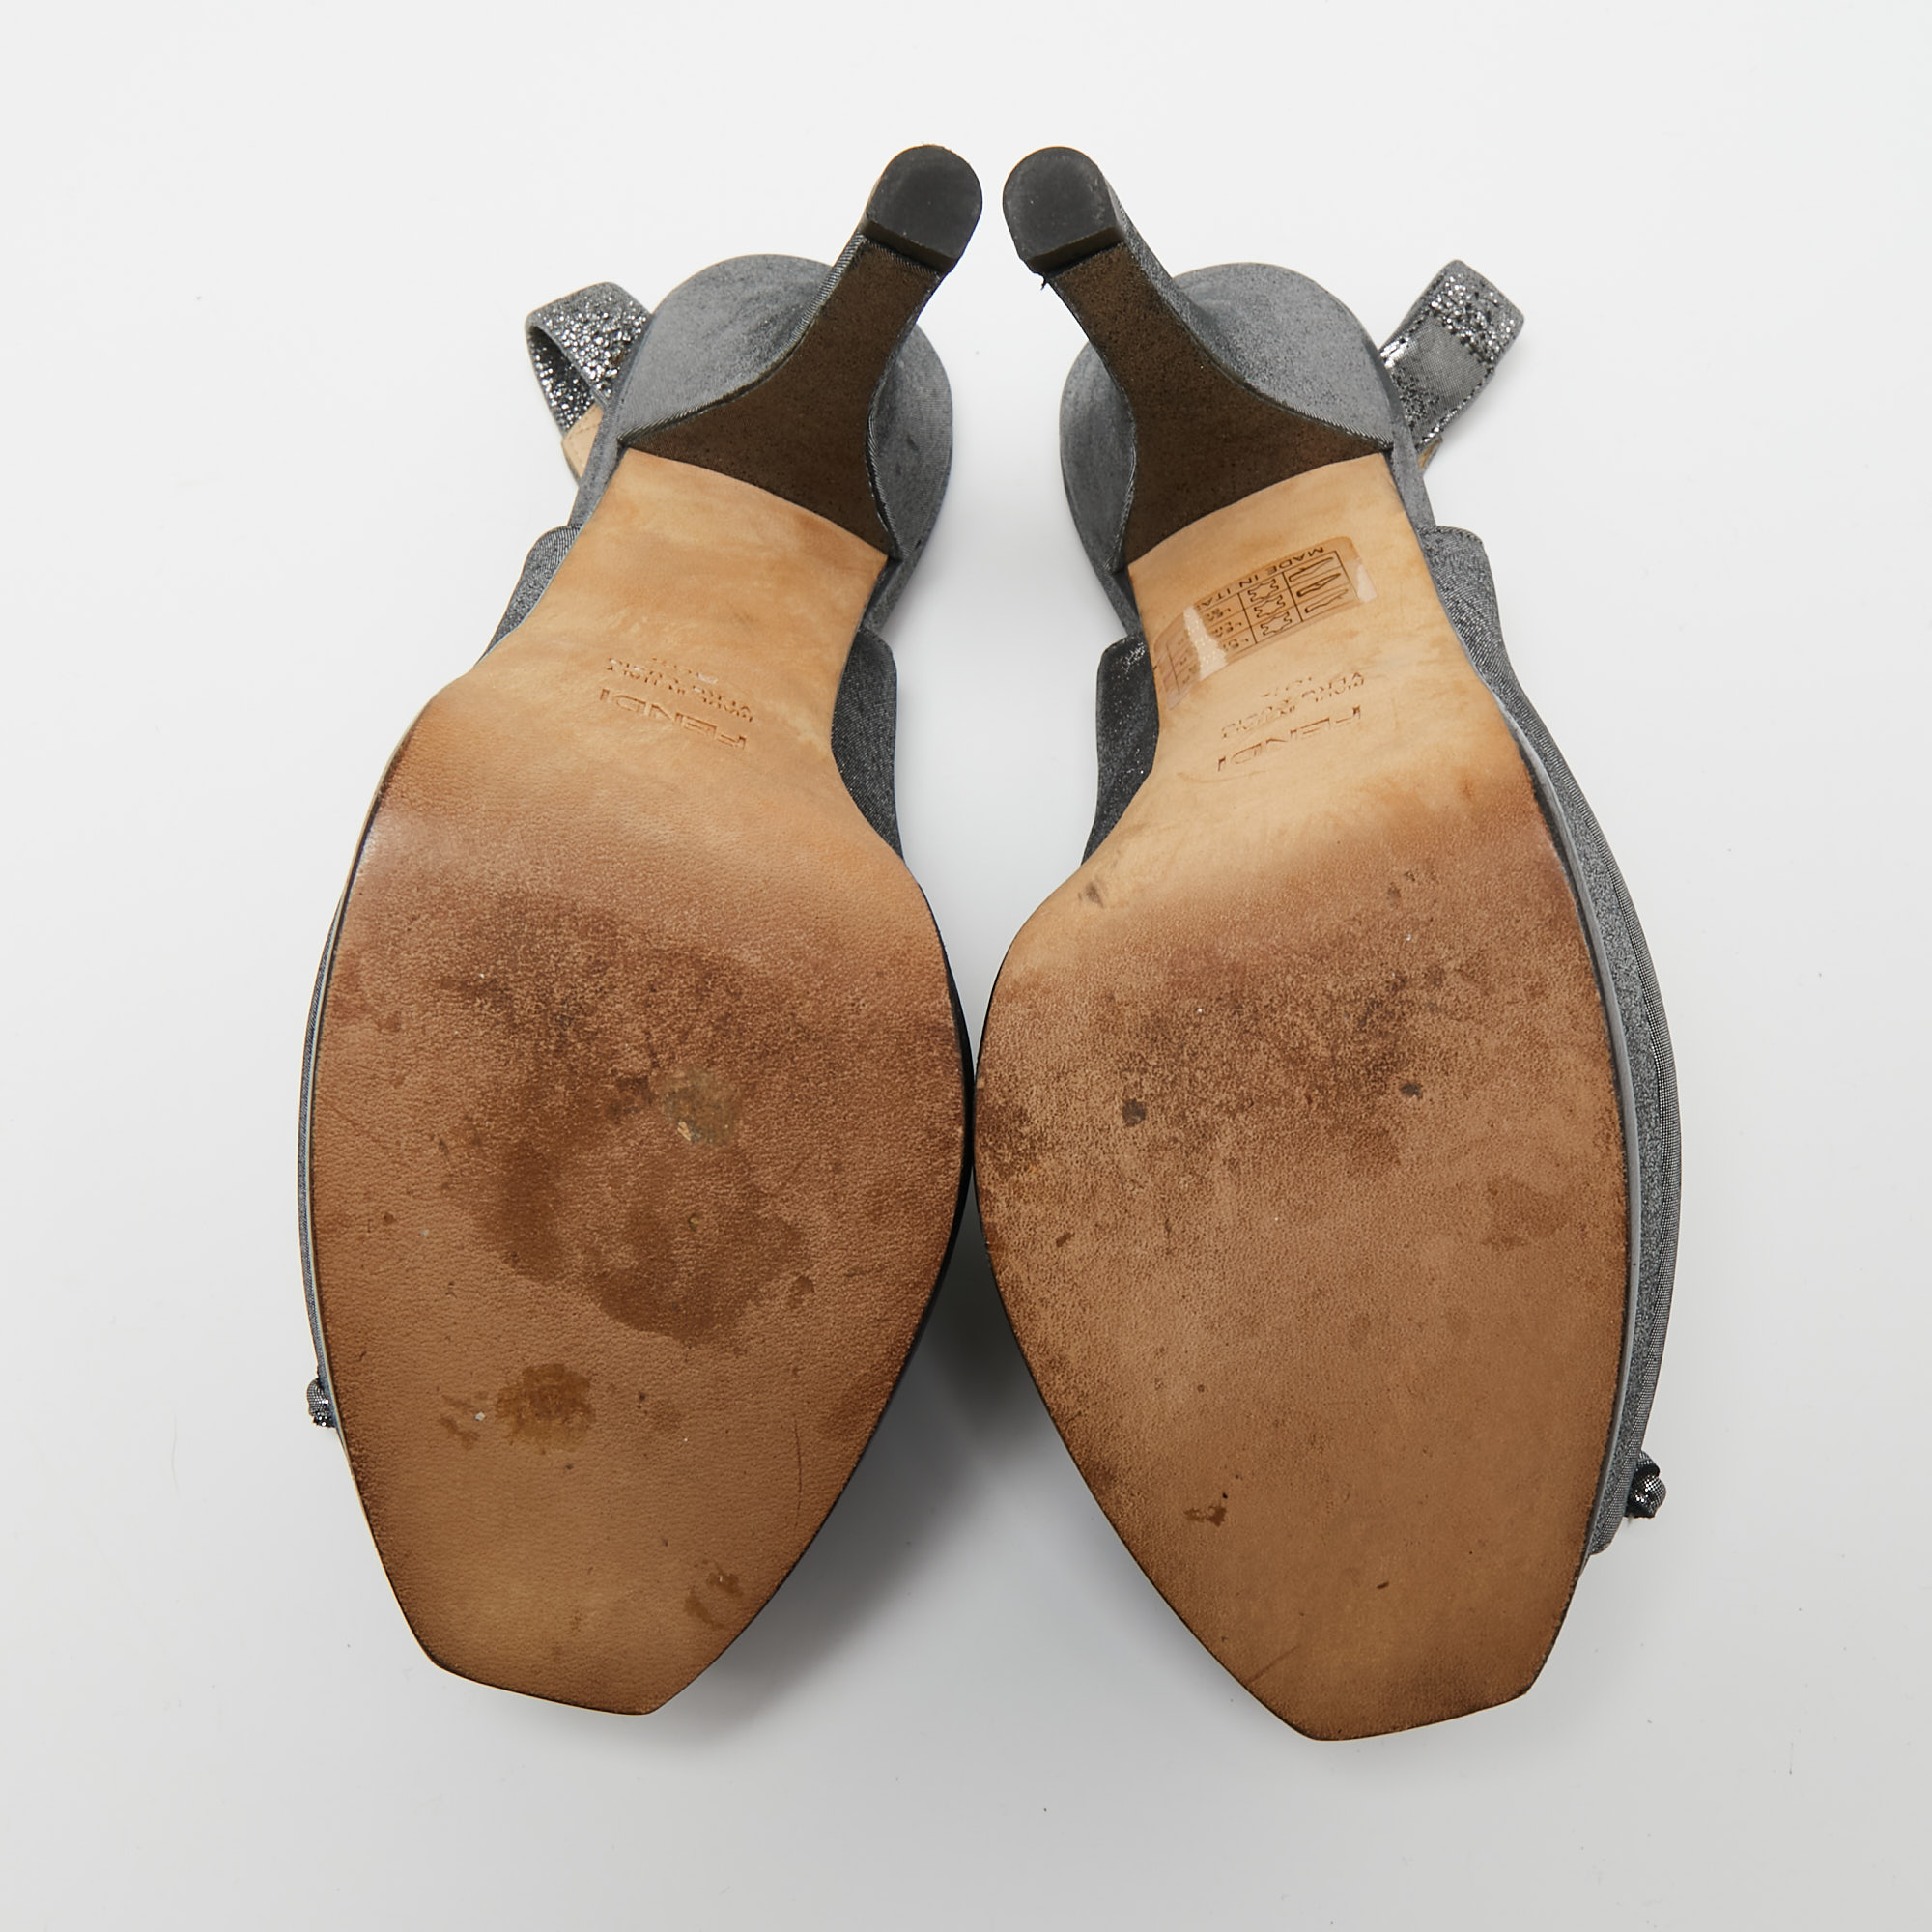 Fendi Metallic Grey Suede Fendista Peep Toe Slingback Platform Sandals Size 38.5